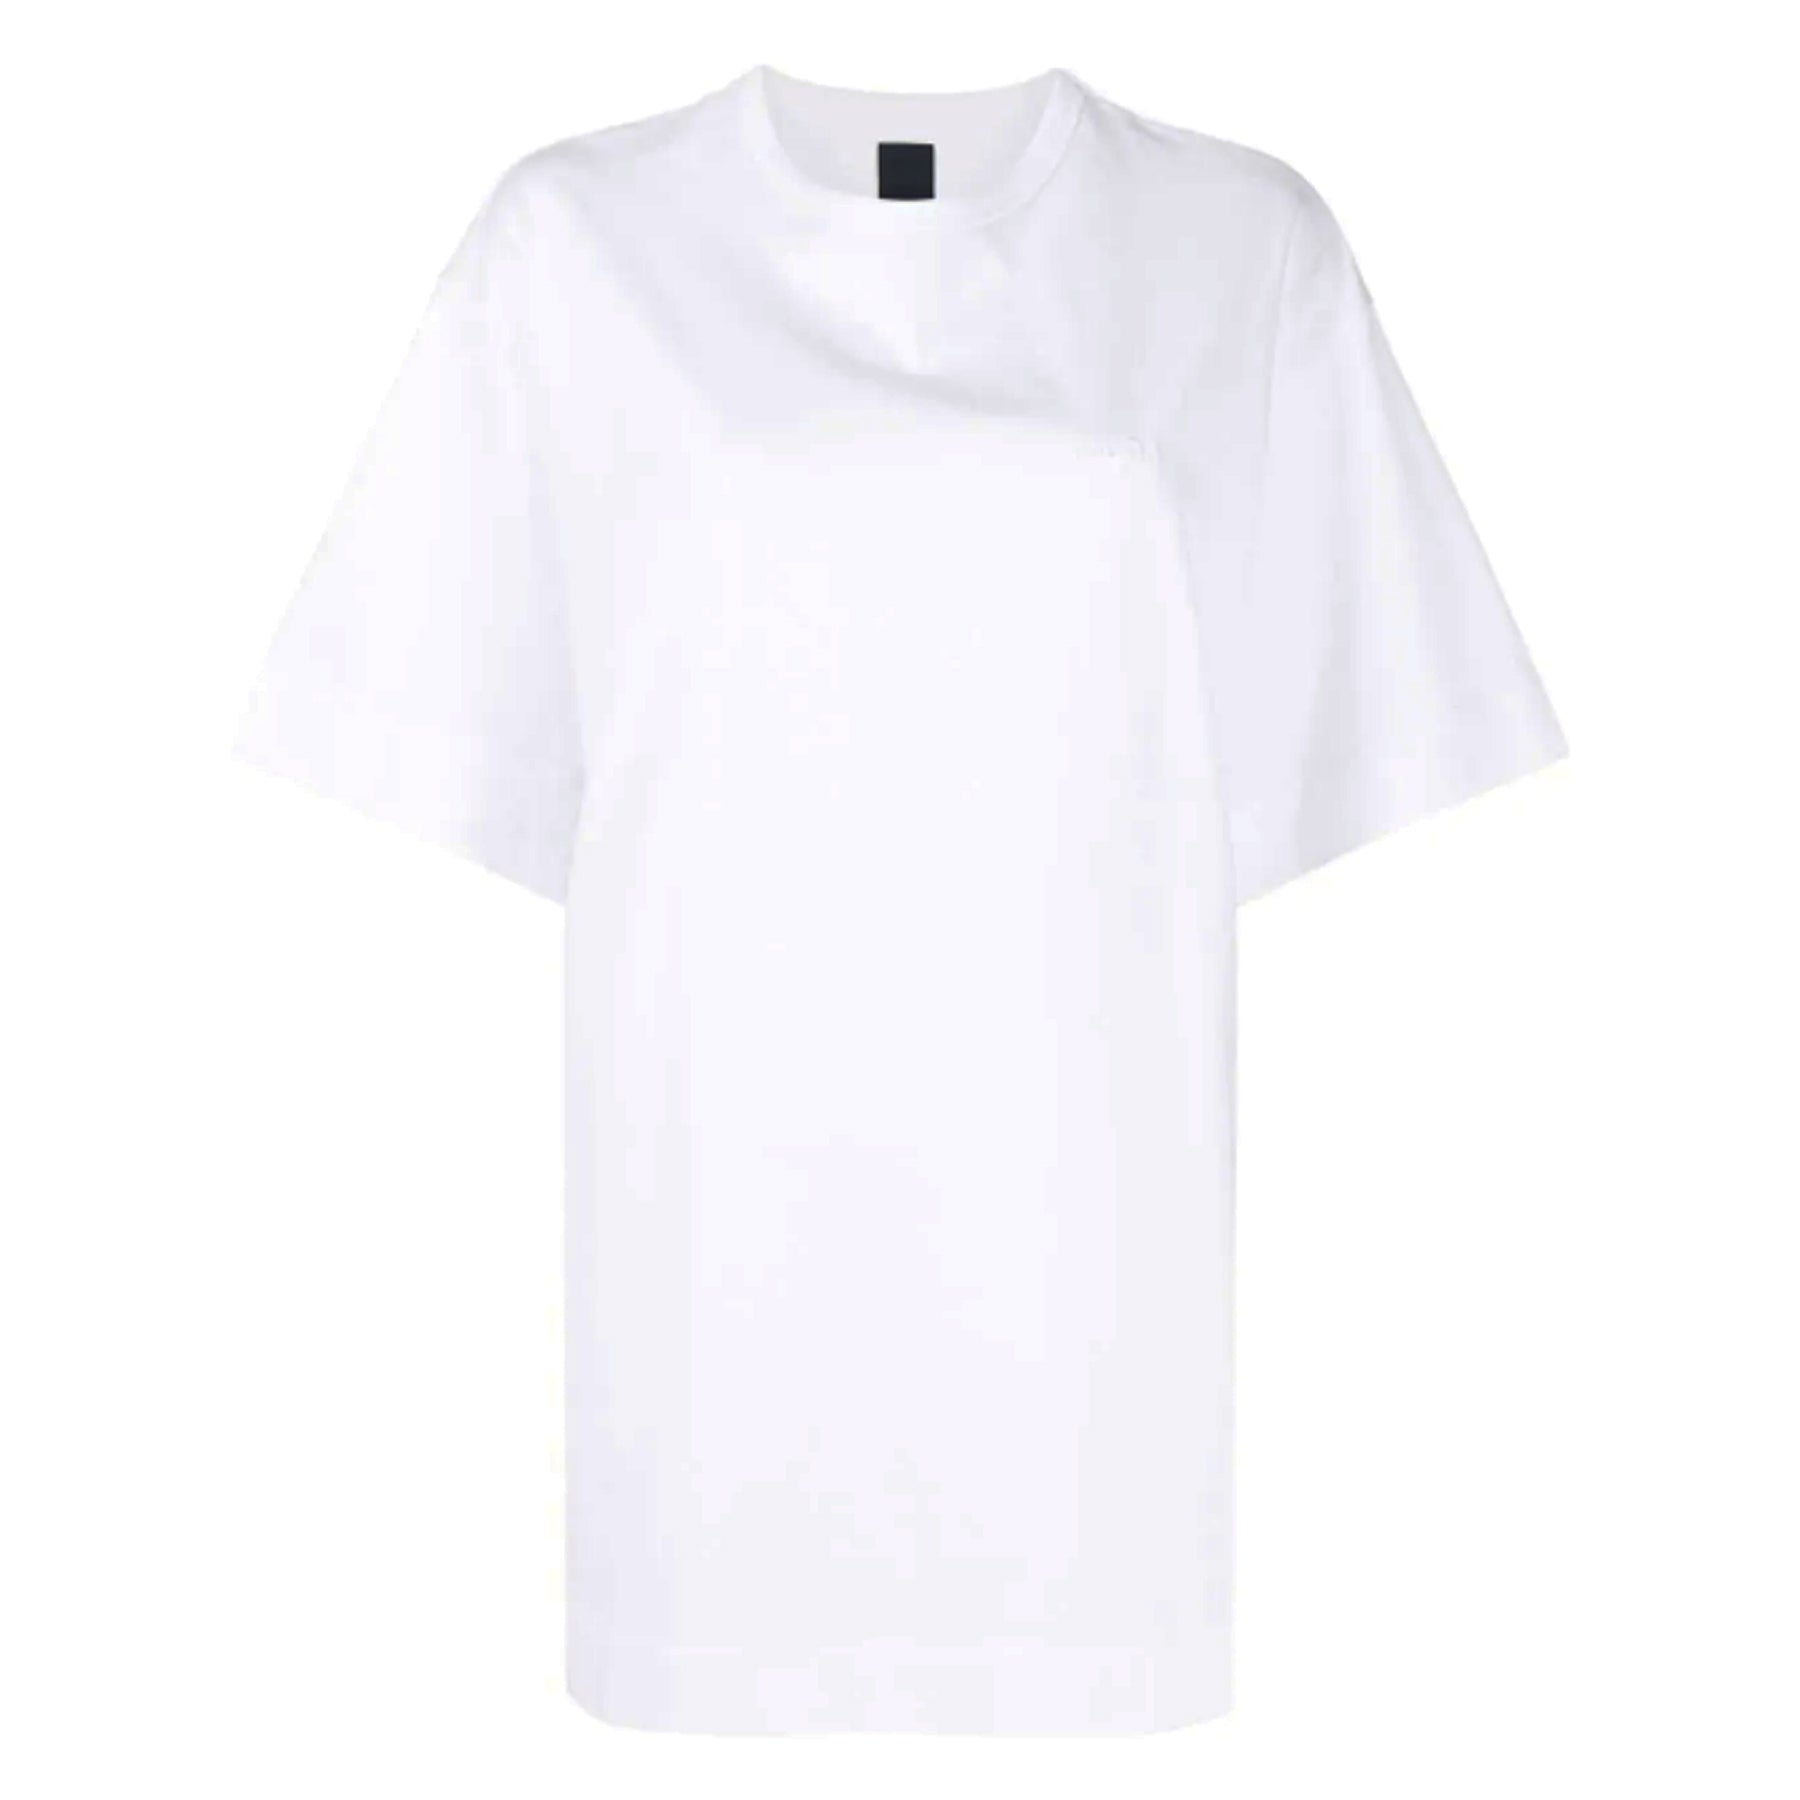 Beauty of a White T-Shirt